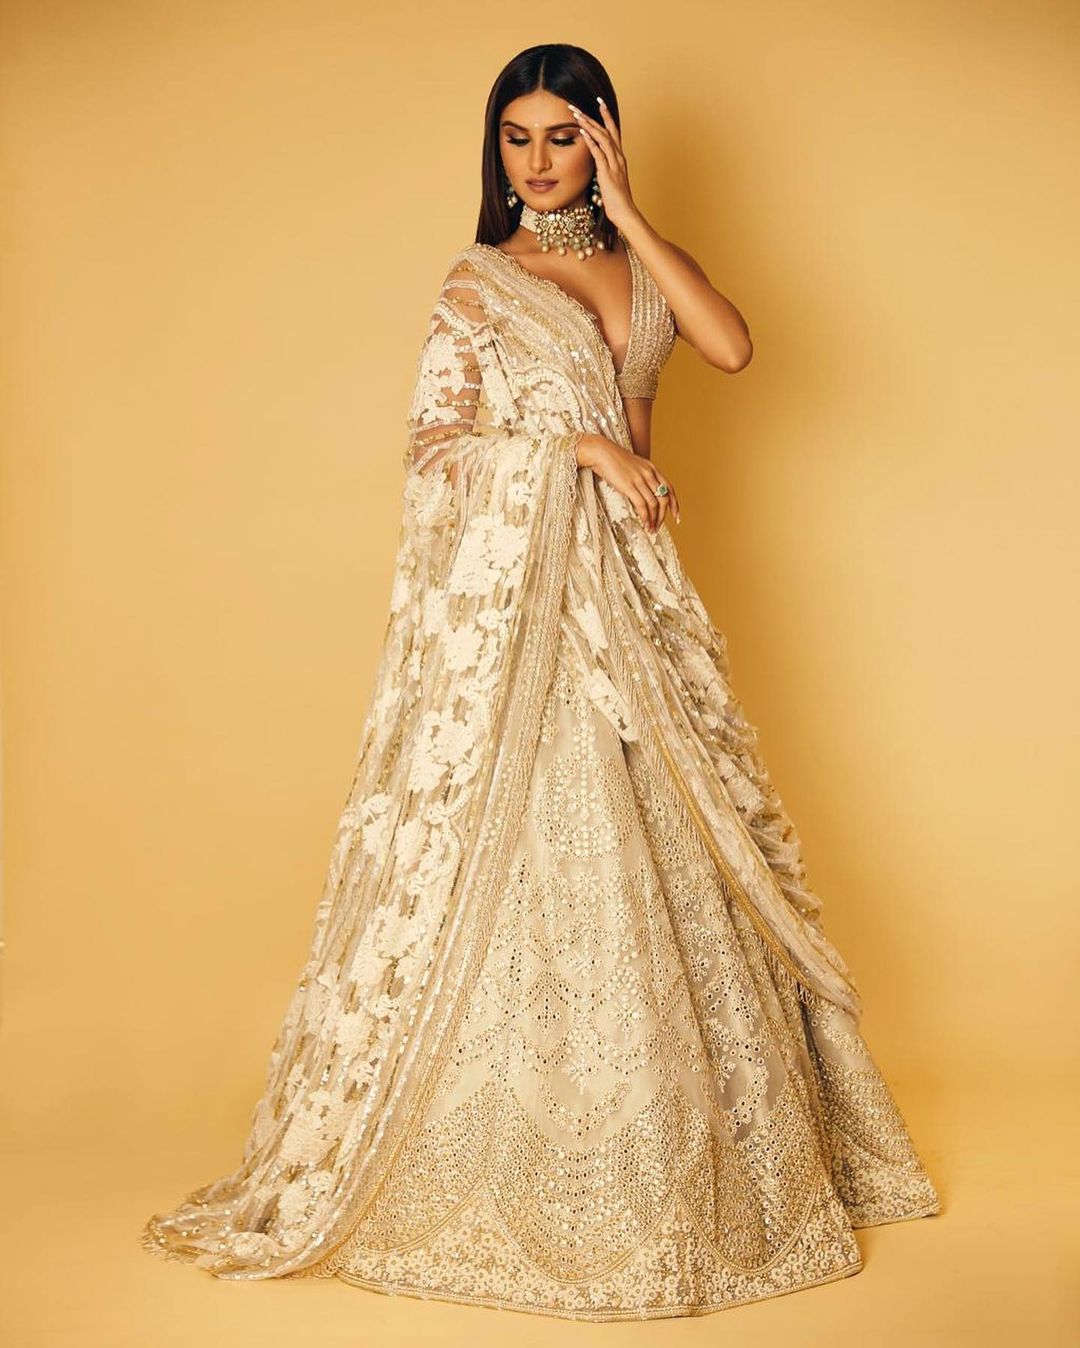 Tara Sutaria looks elegant in the white and golden lehenga.